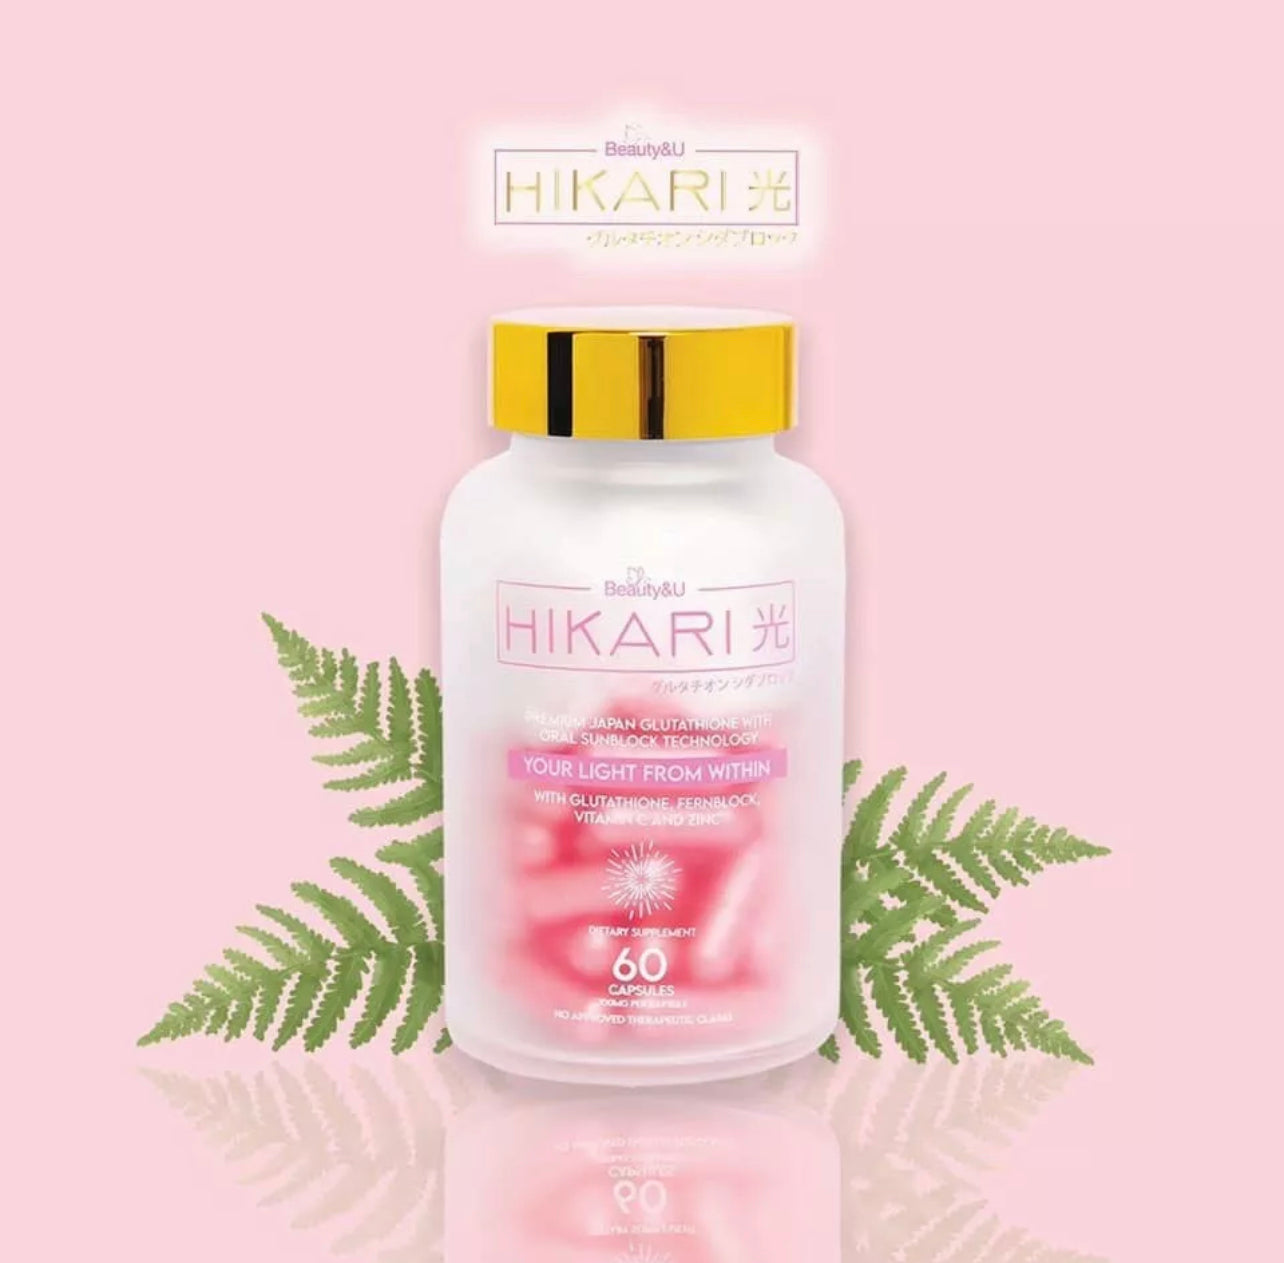 Hikari Glutathione Capsule | Japan Premium Glutathione With Oral Sunblock Technology -60caps - Shop Essential Skin Care Products online | Natural Organic skin care products | ROSYSKIN ESSENTI